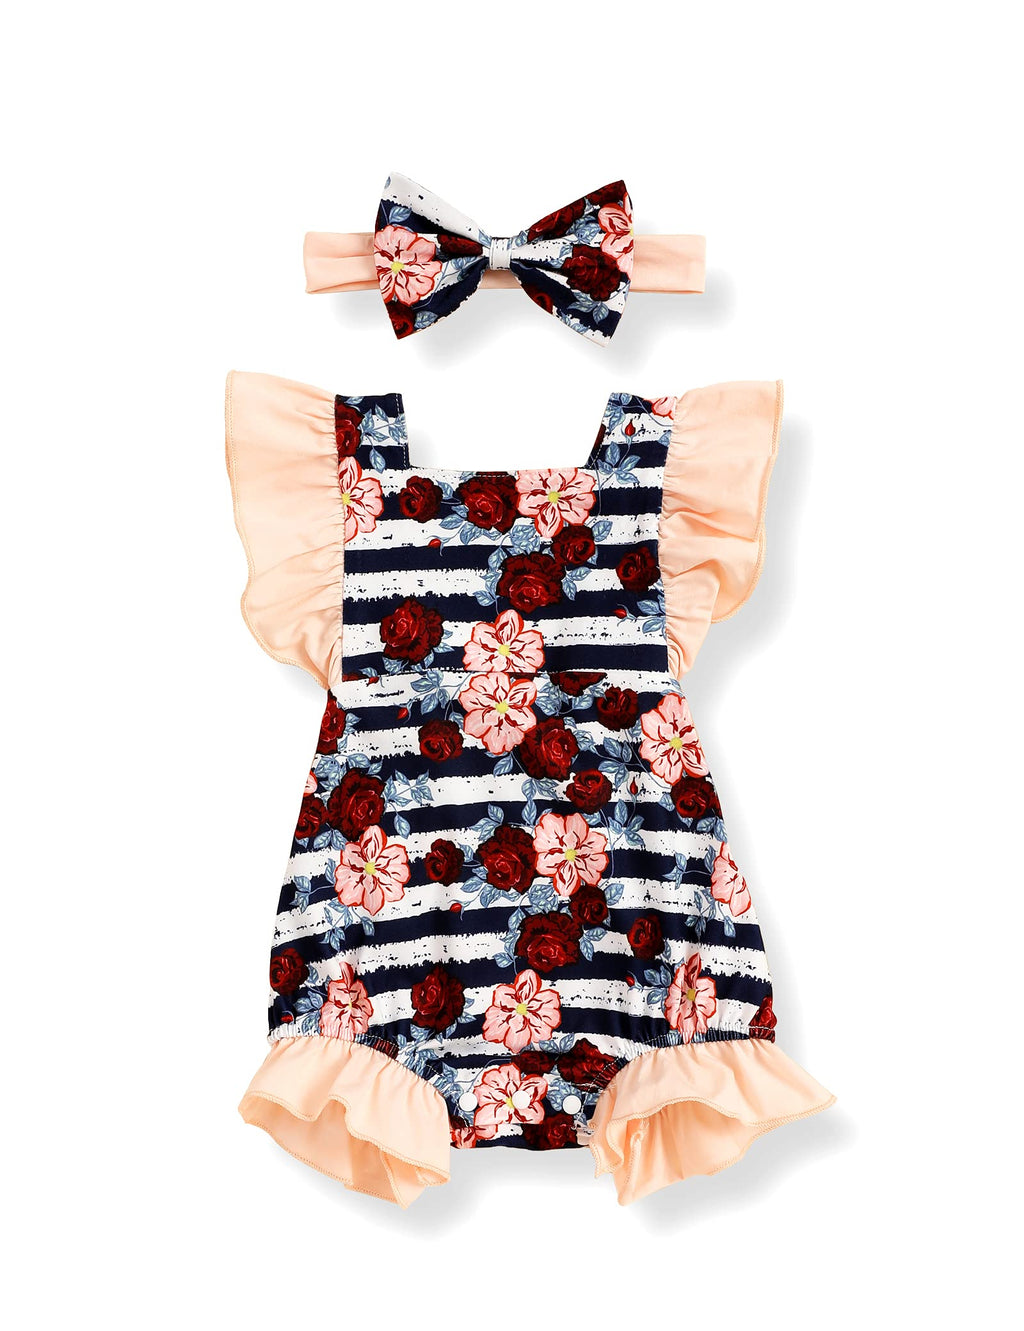 [Australia] - Infant Baby Girls Clothes Ruffle Floral Romper Jumpsuits Bodysuit + Headband Outfits Set 0-12M Apricot 3 Months 